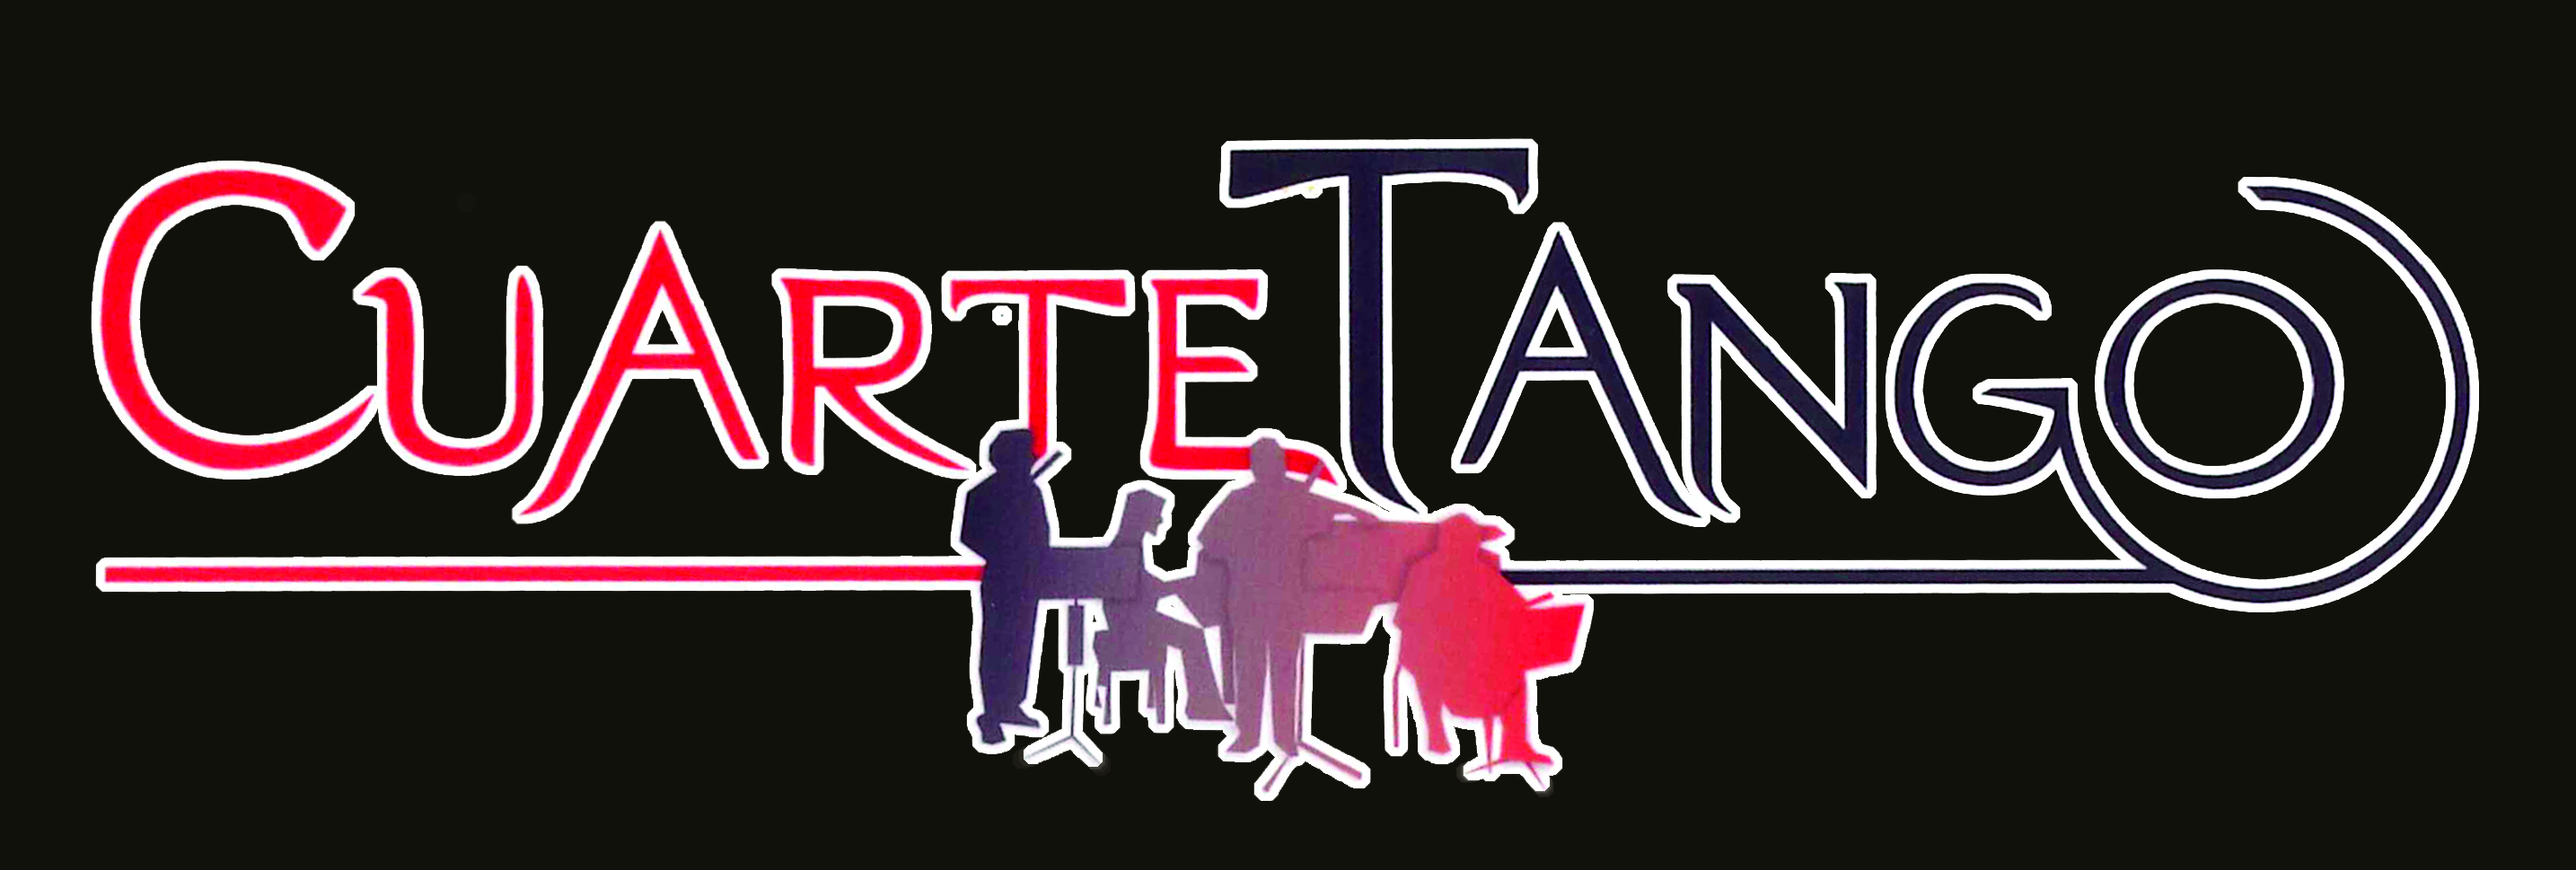 CuarteTango Logo